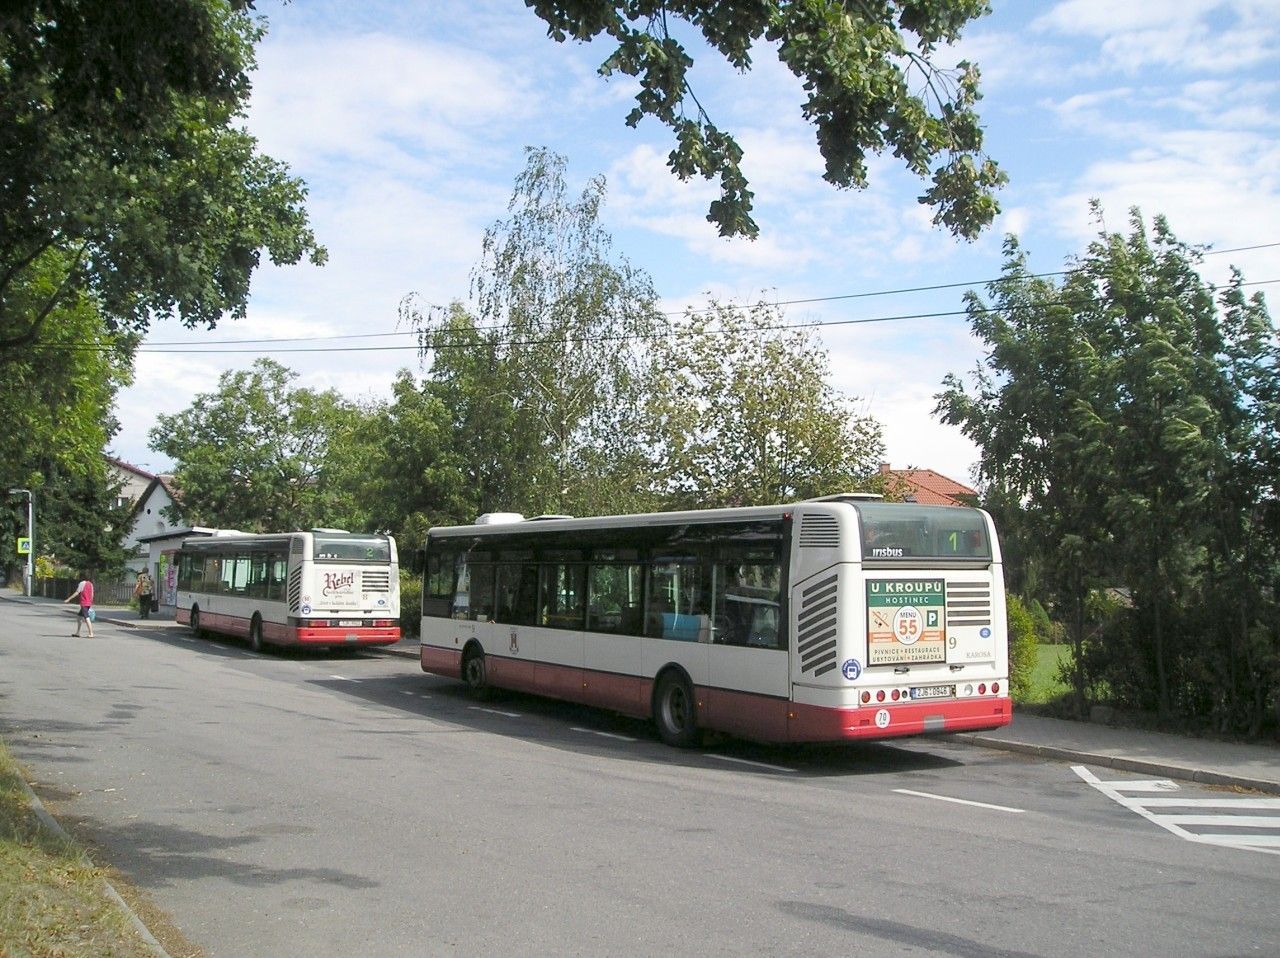 Citybus a Citelis na konen zastvce Perknov.